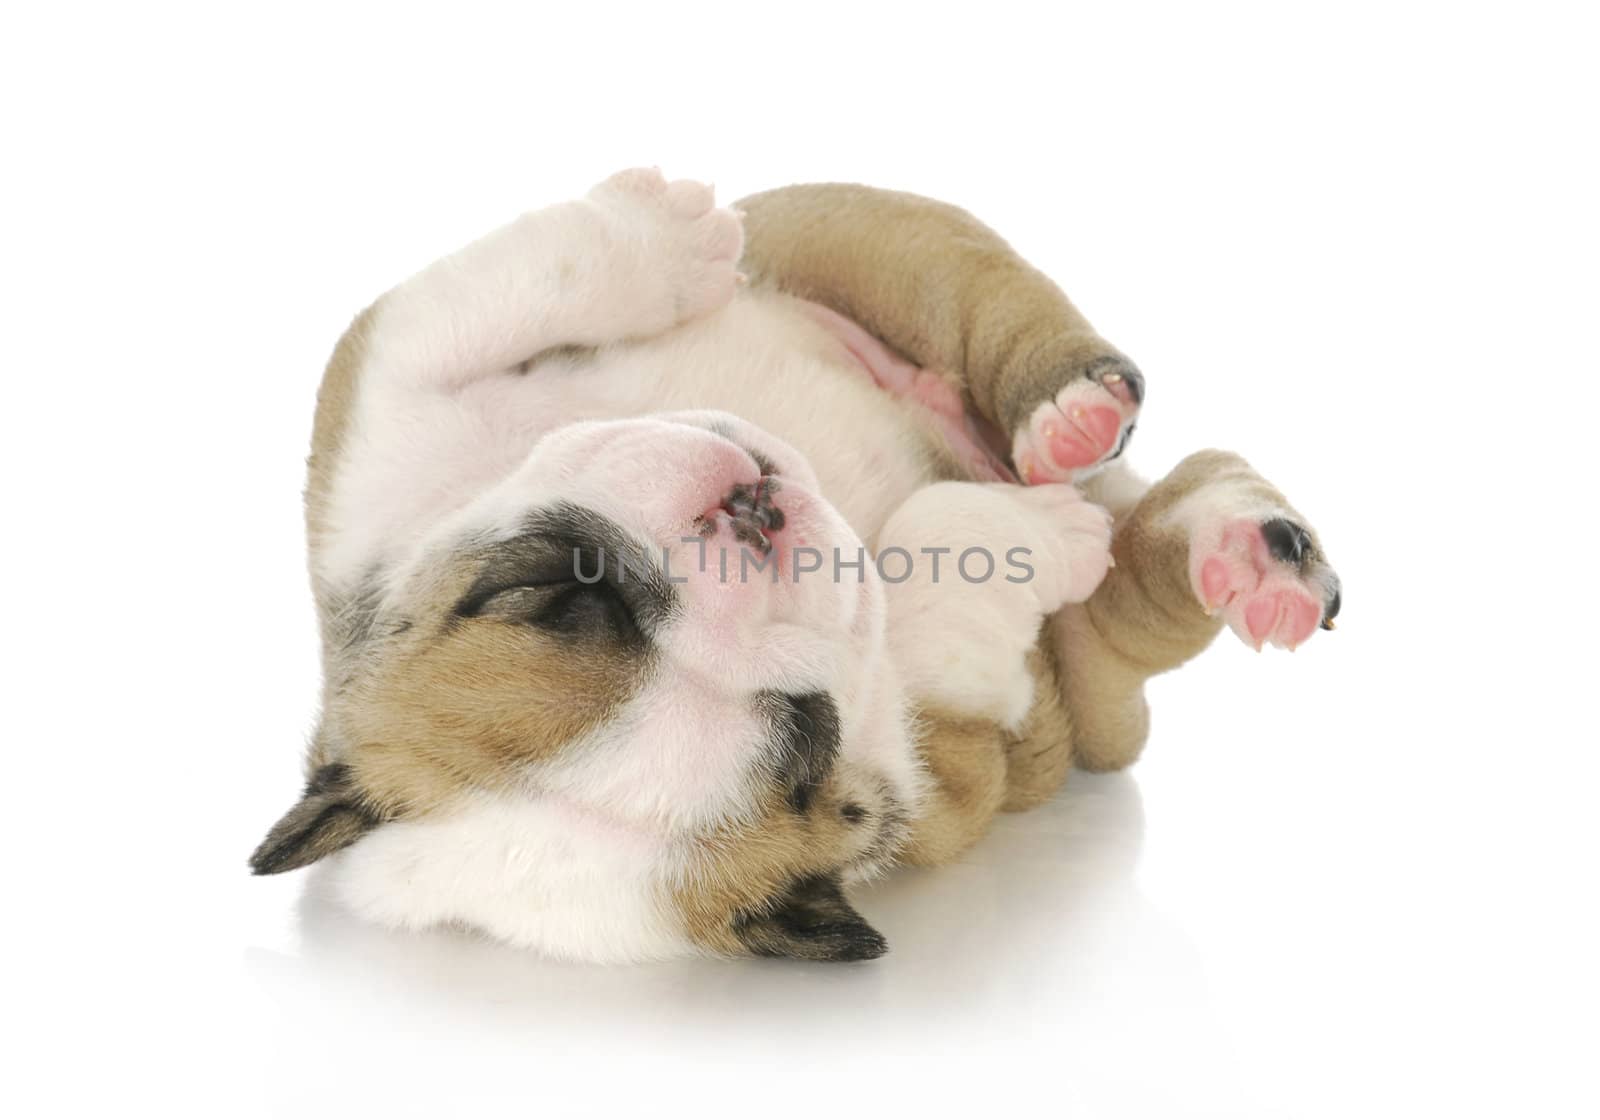 puppy upside down - cute english bulldog puppy upside down - 3 weeks old